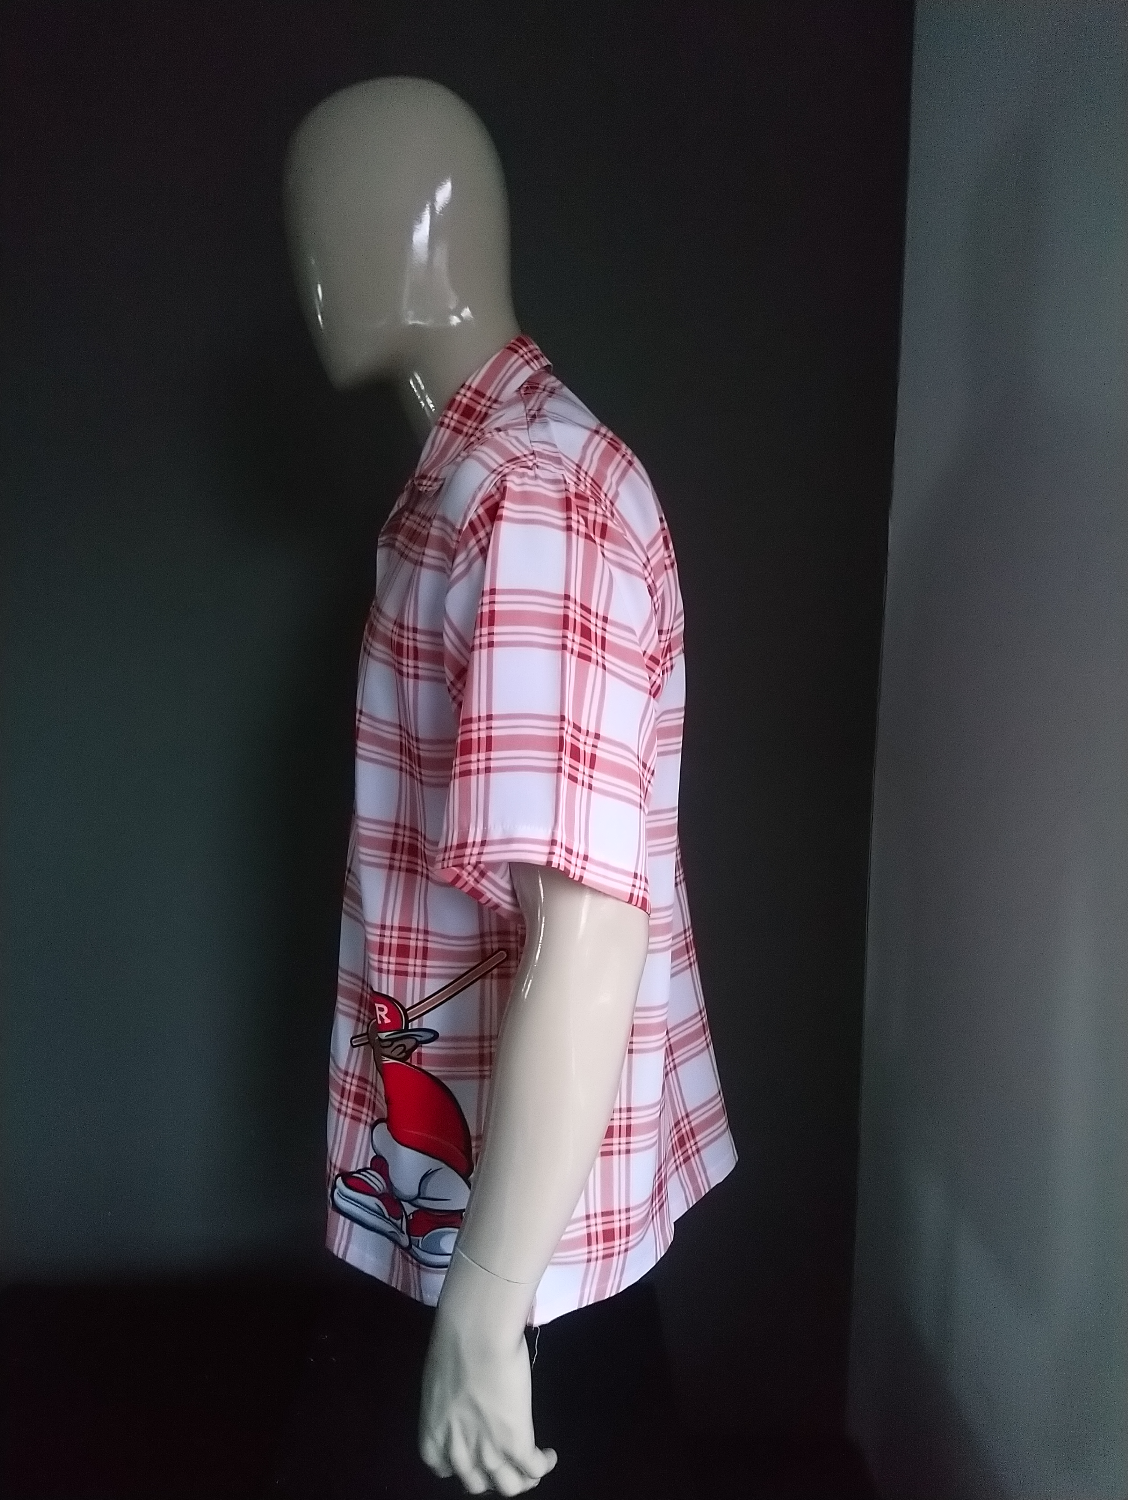 Camisa SuperCool con mangas cortas. Motivo a cuadros blanco rosa rojo. Talla L.